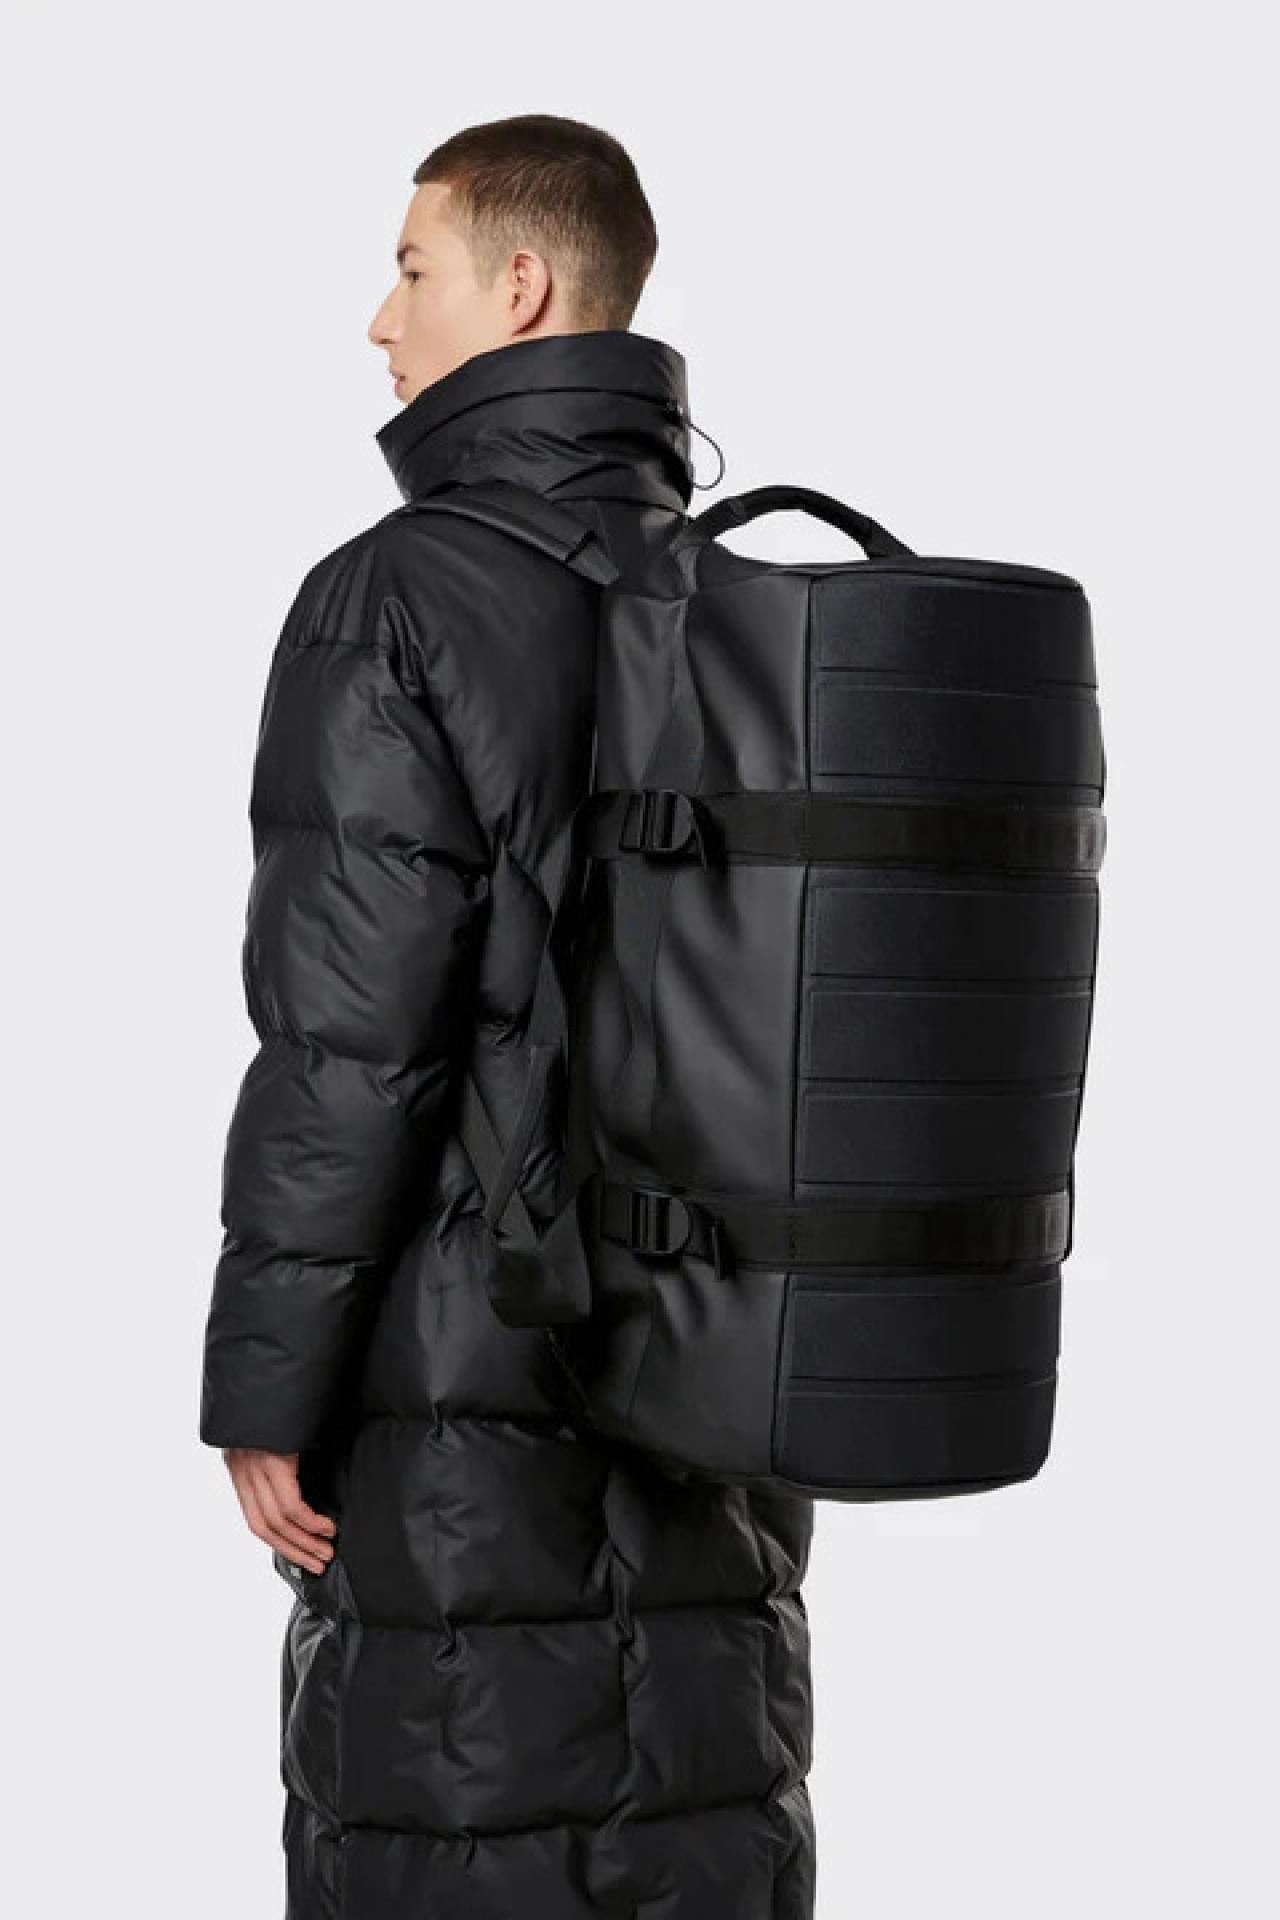 Rains Sporttasche Duffel Bag 13370-01 Black Black